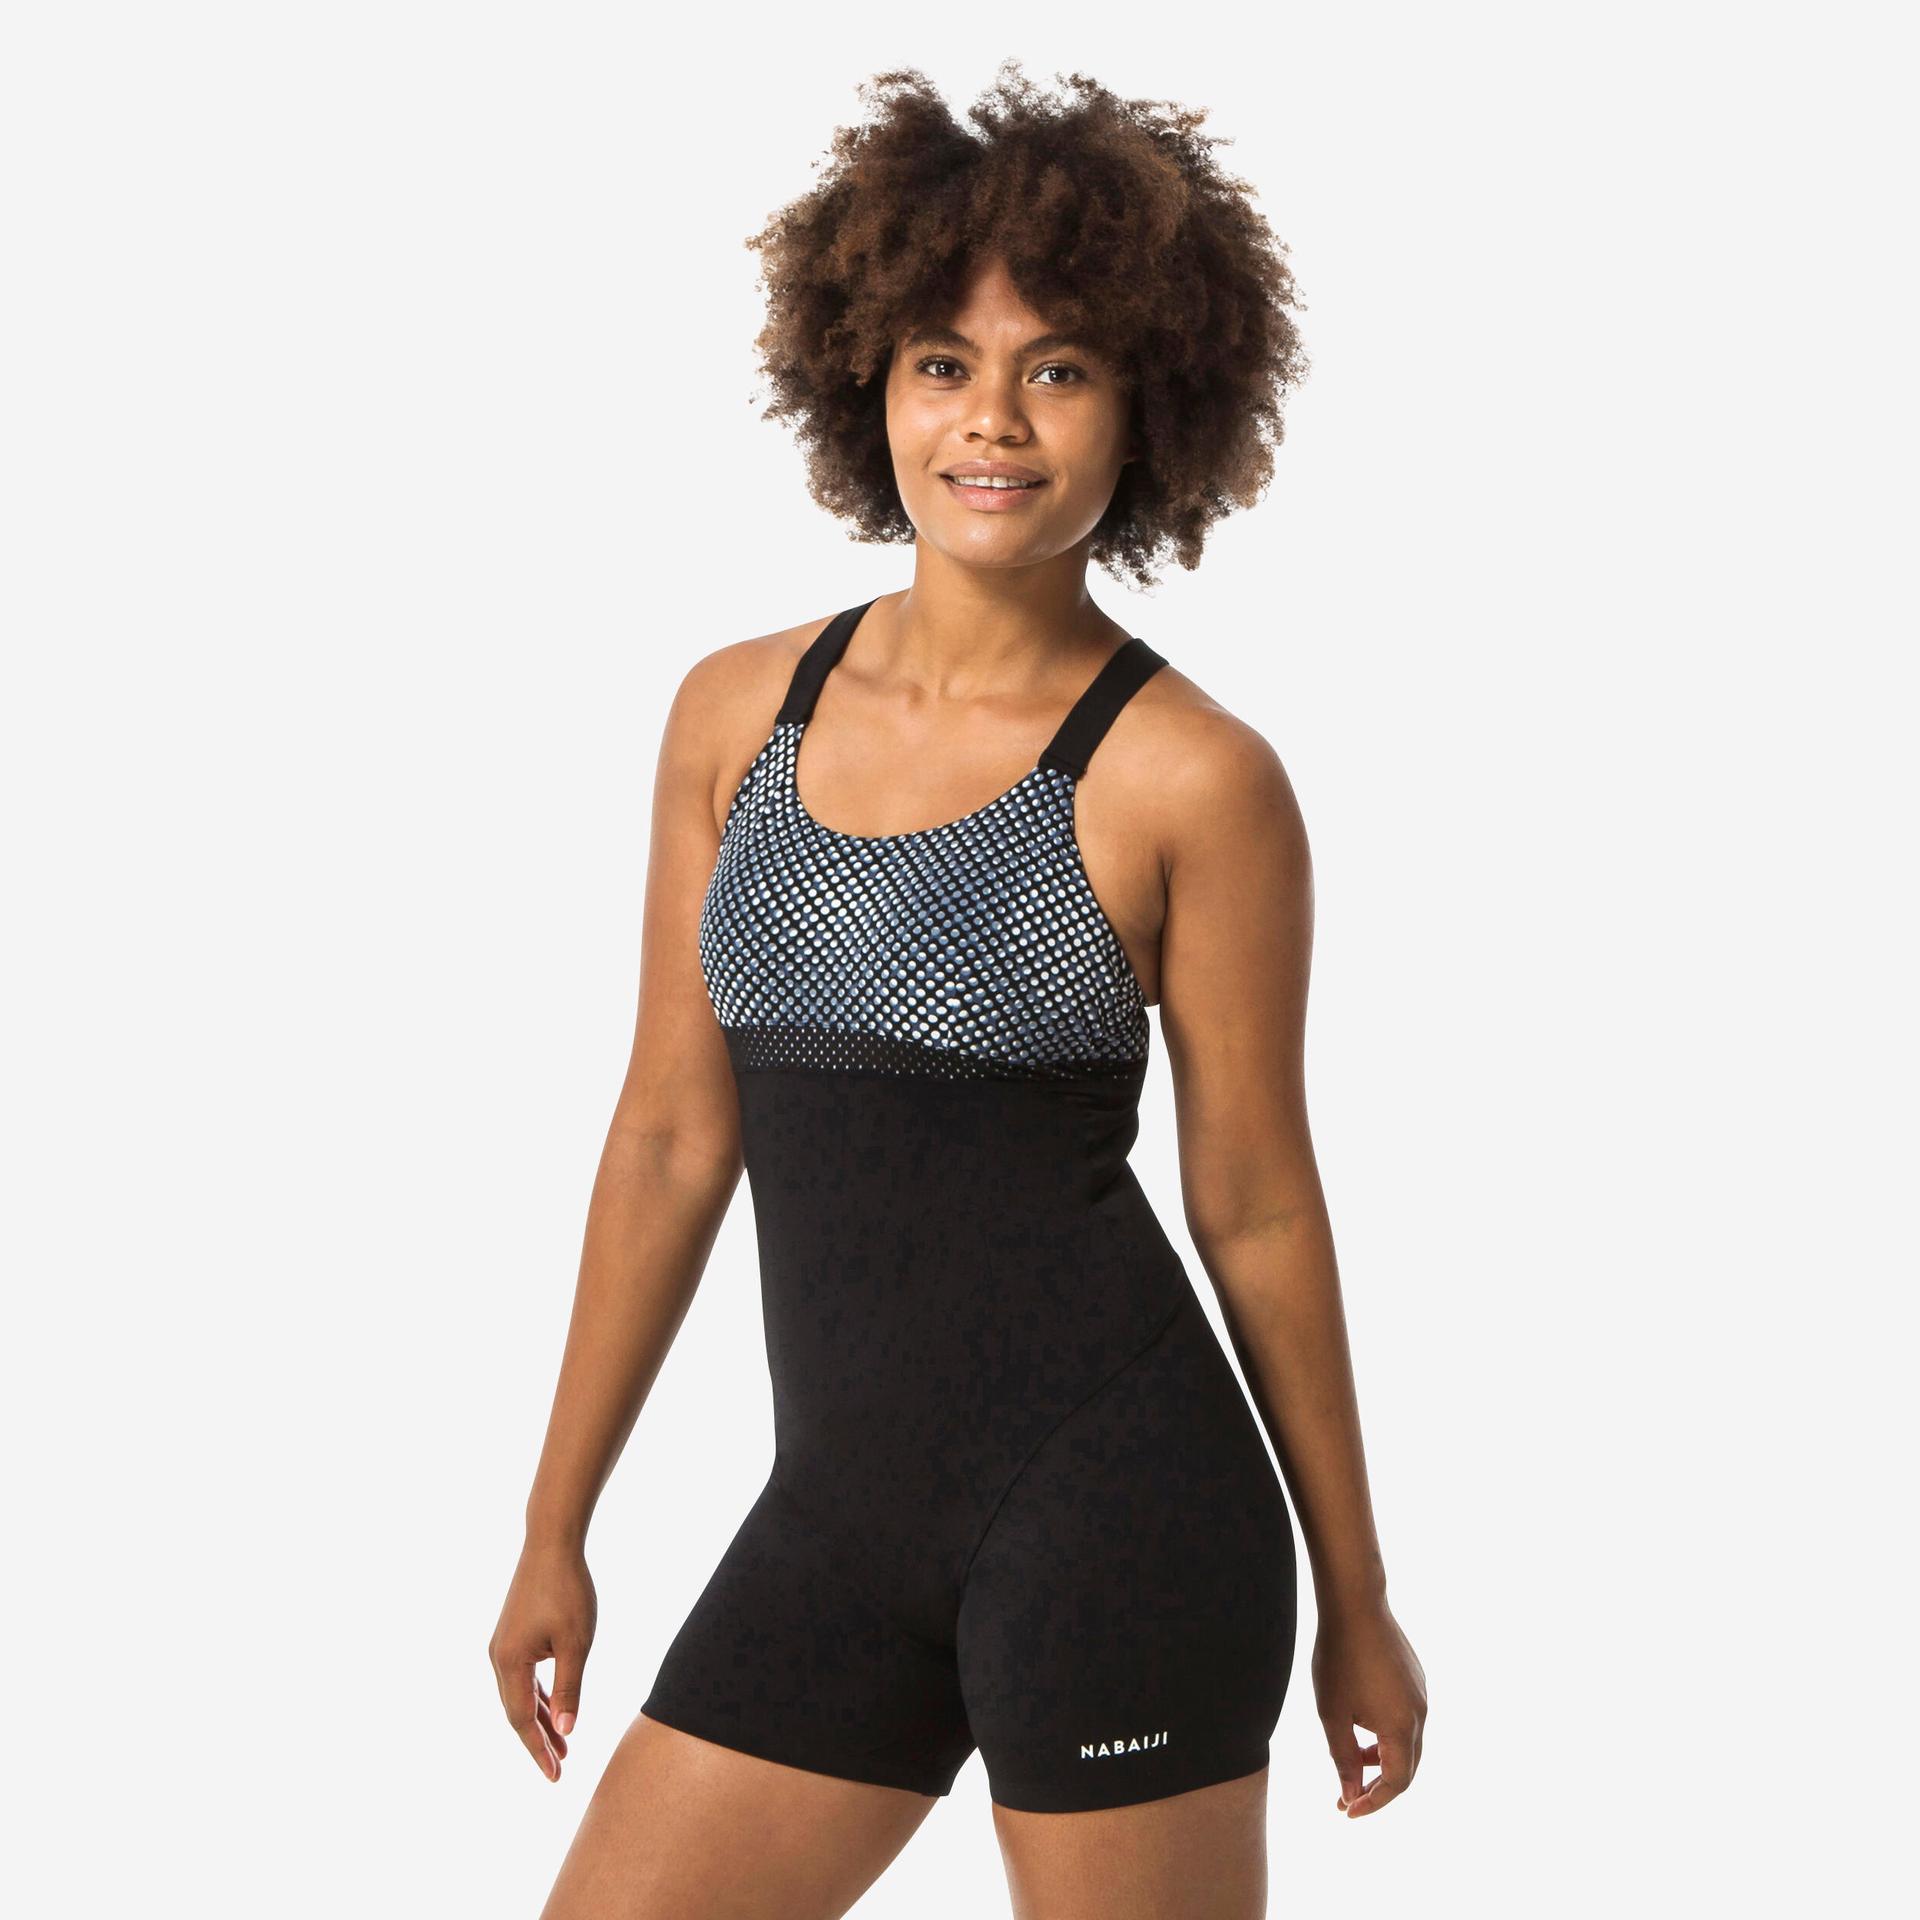 women's-aquafit-aquabiking-shorty-1-piece-swimsuit-elea-bul-black-grey